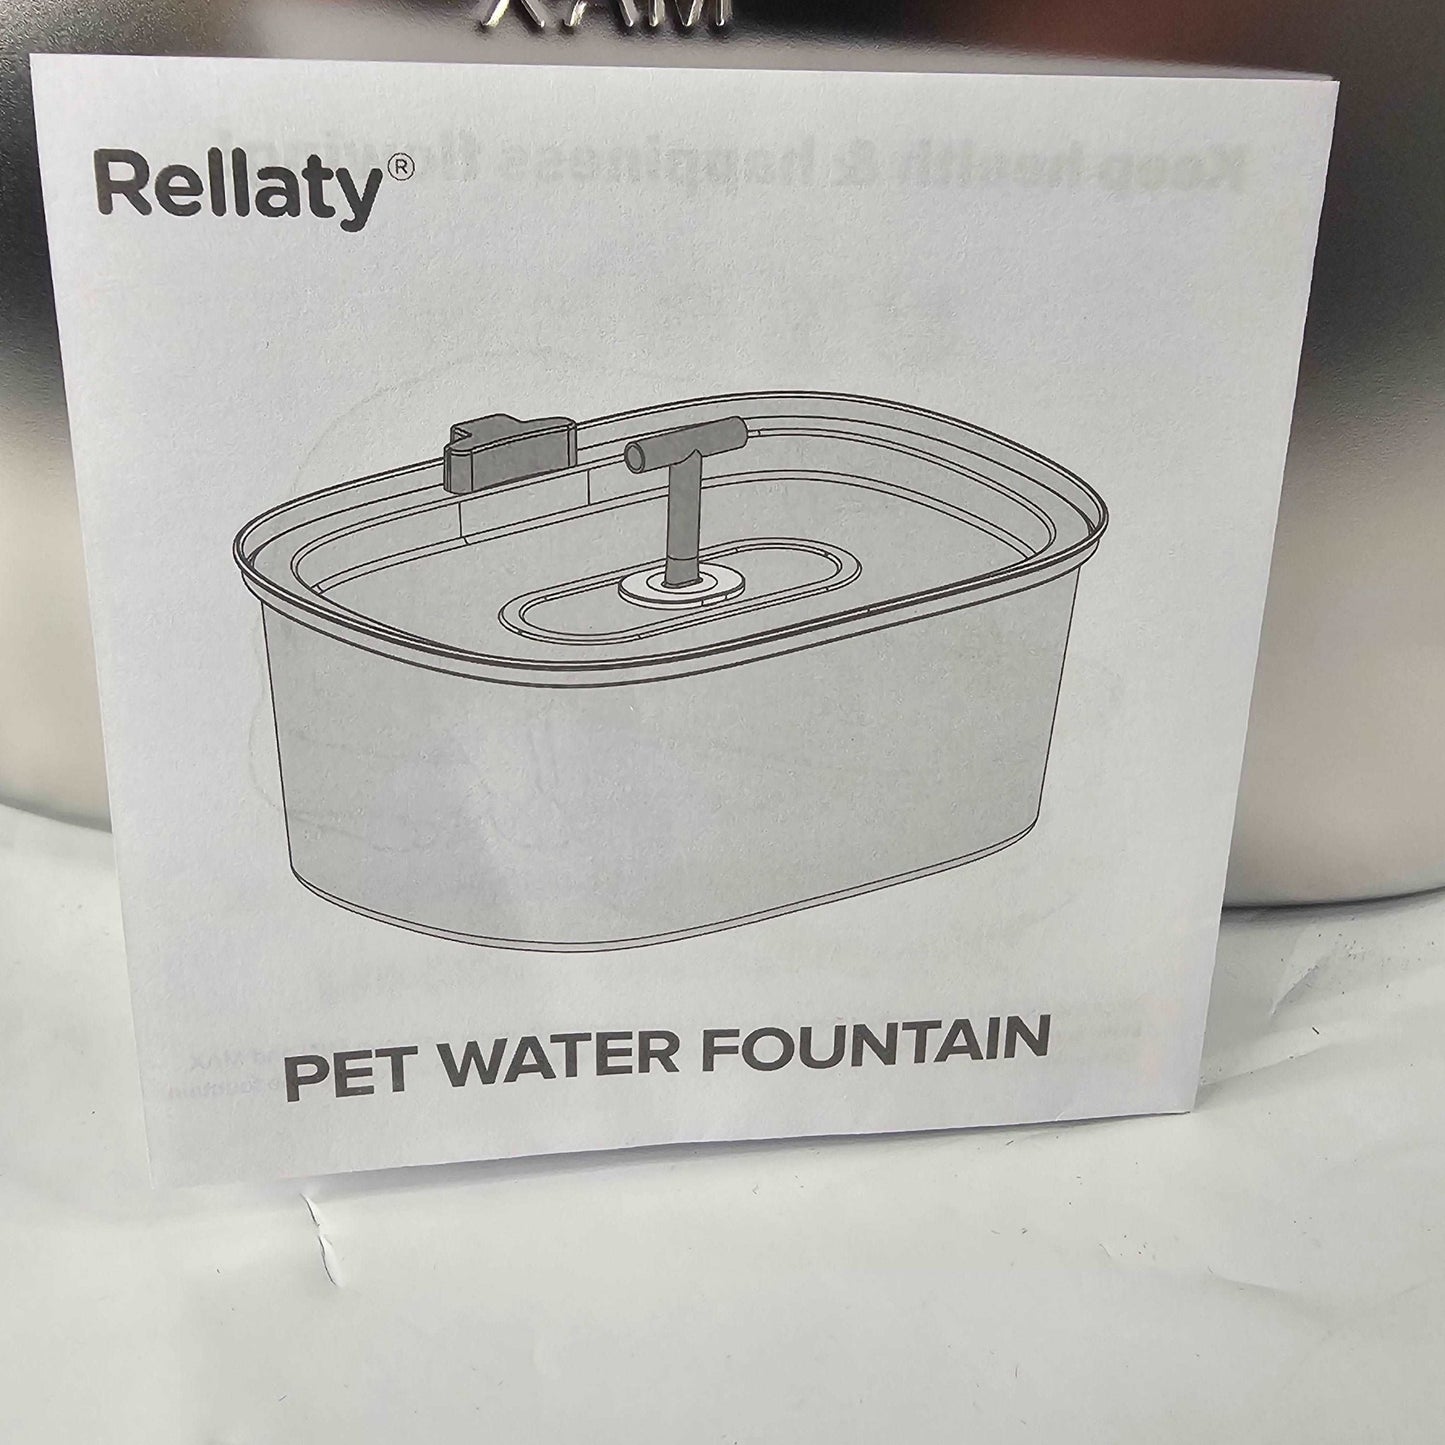 3.2L/108Oz Pet Water Fountain Rellaty - DQ Distribution